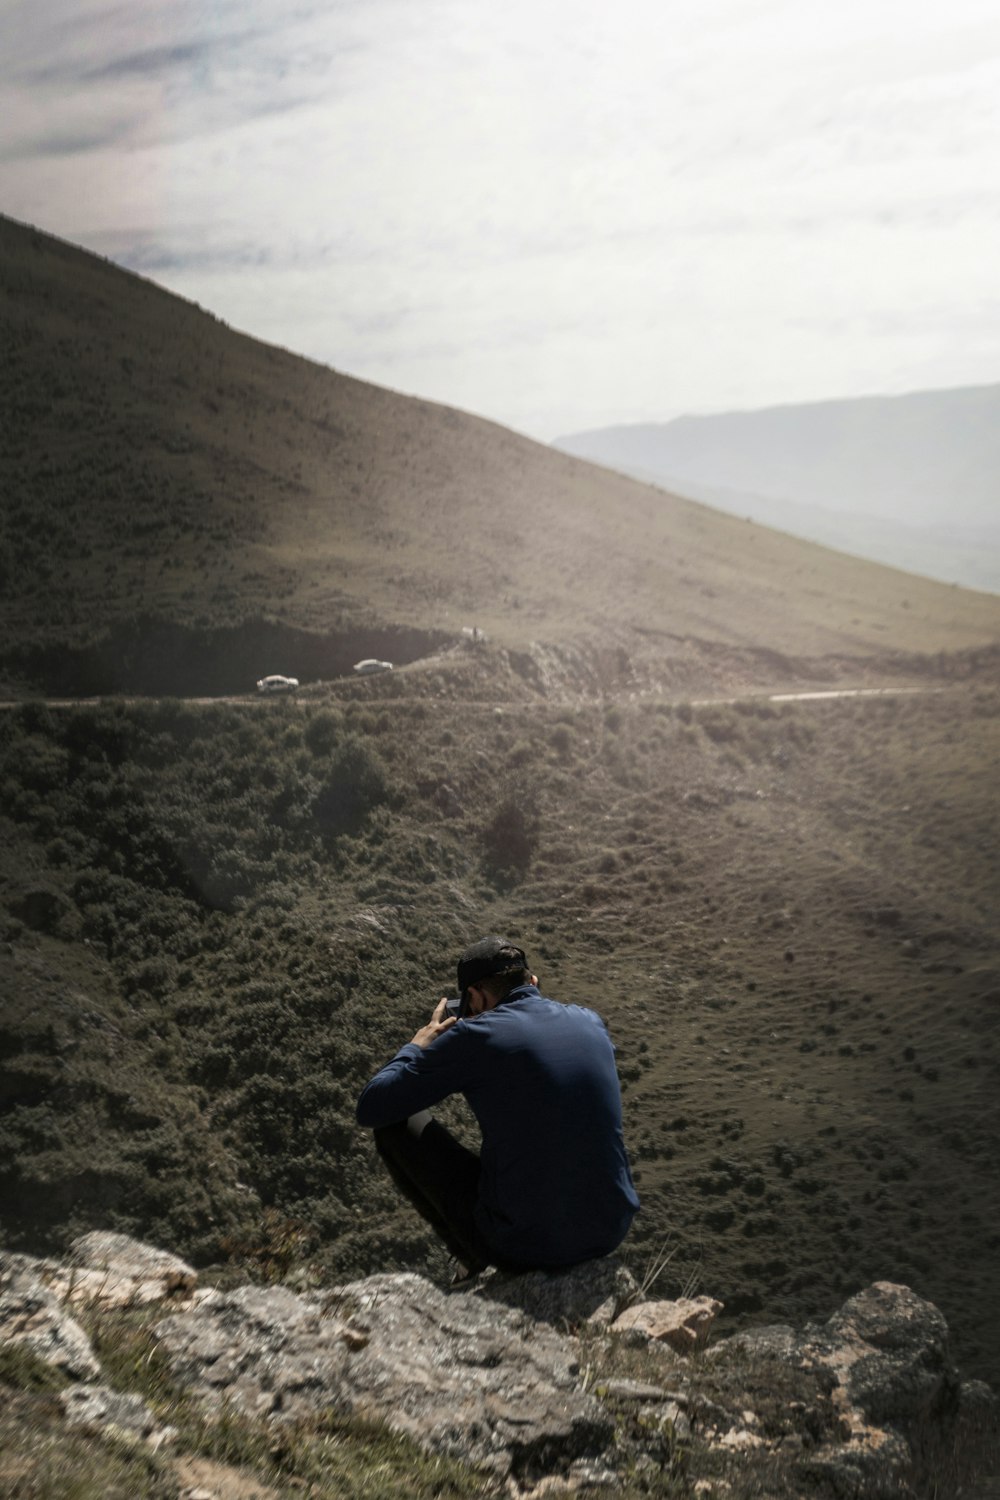 man sitting on mountain